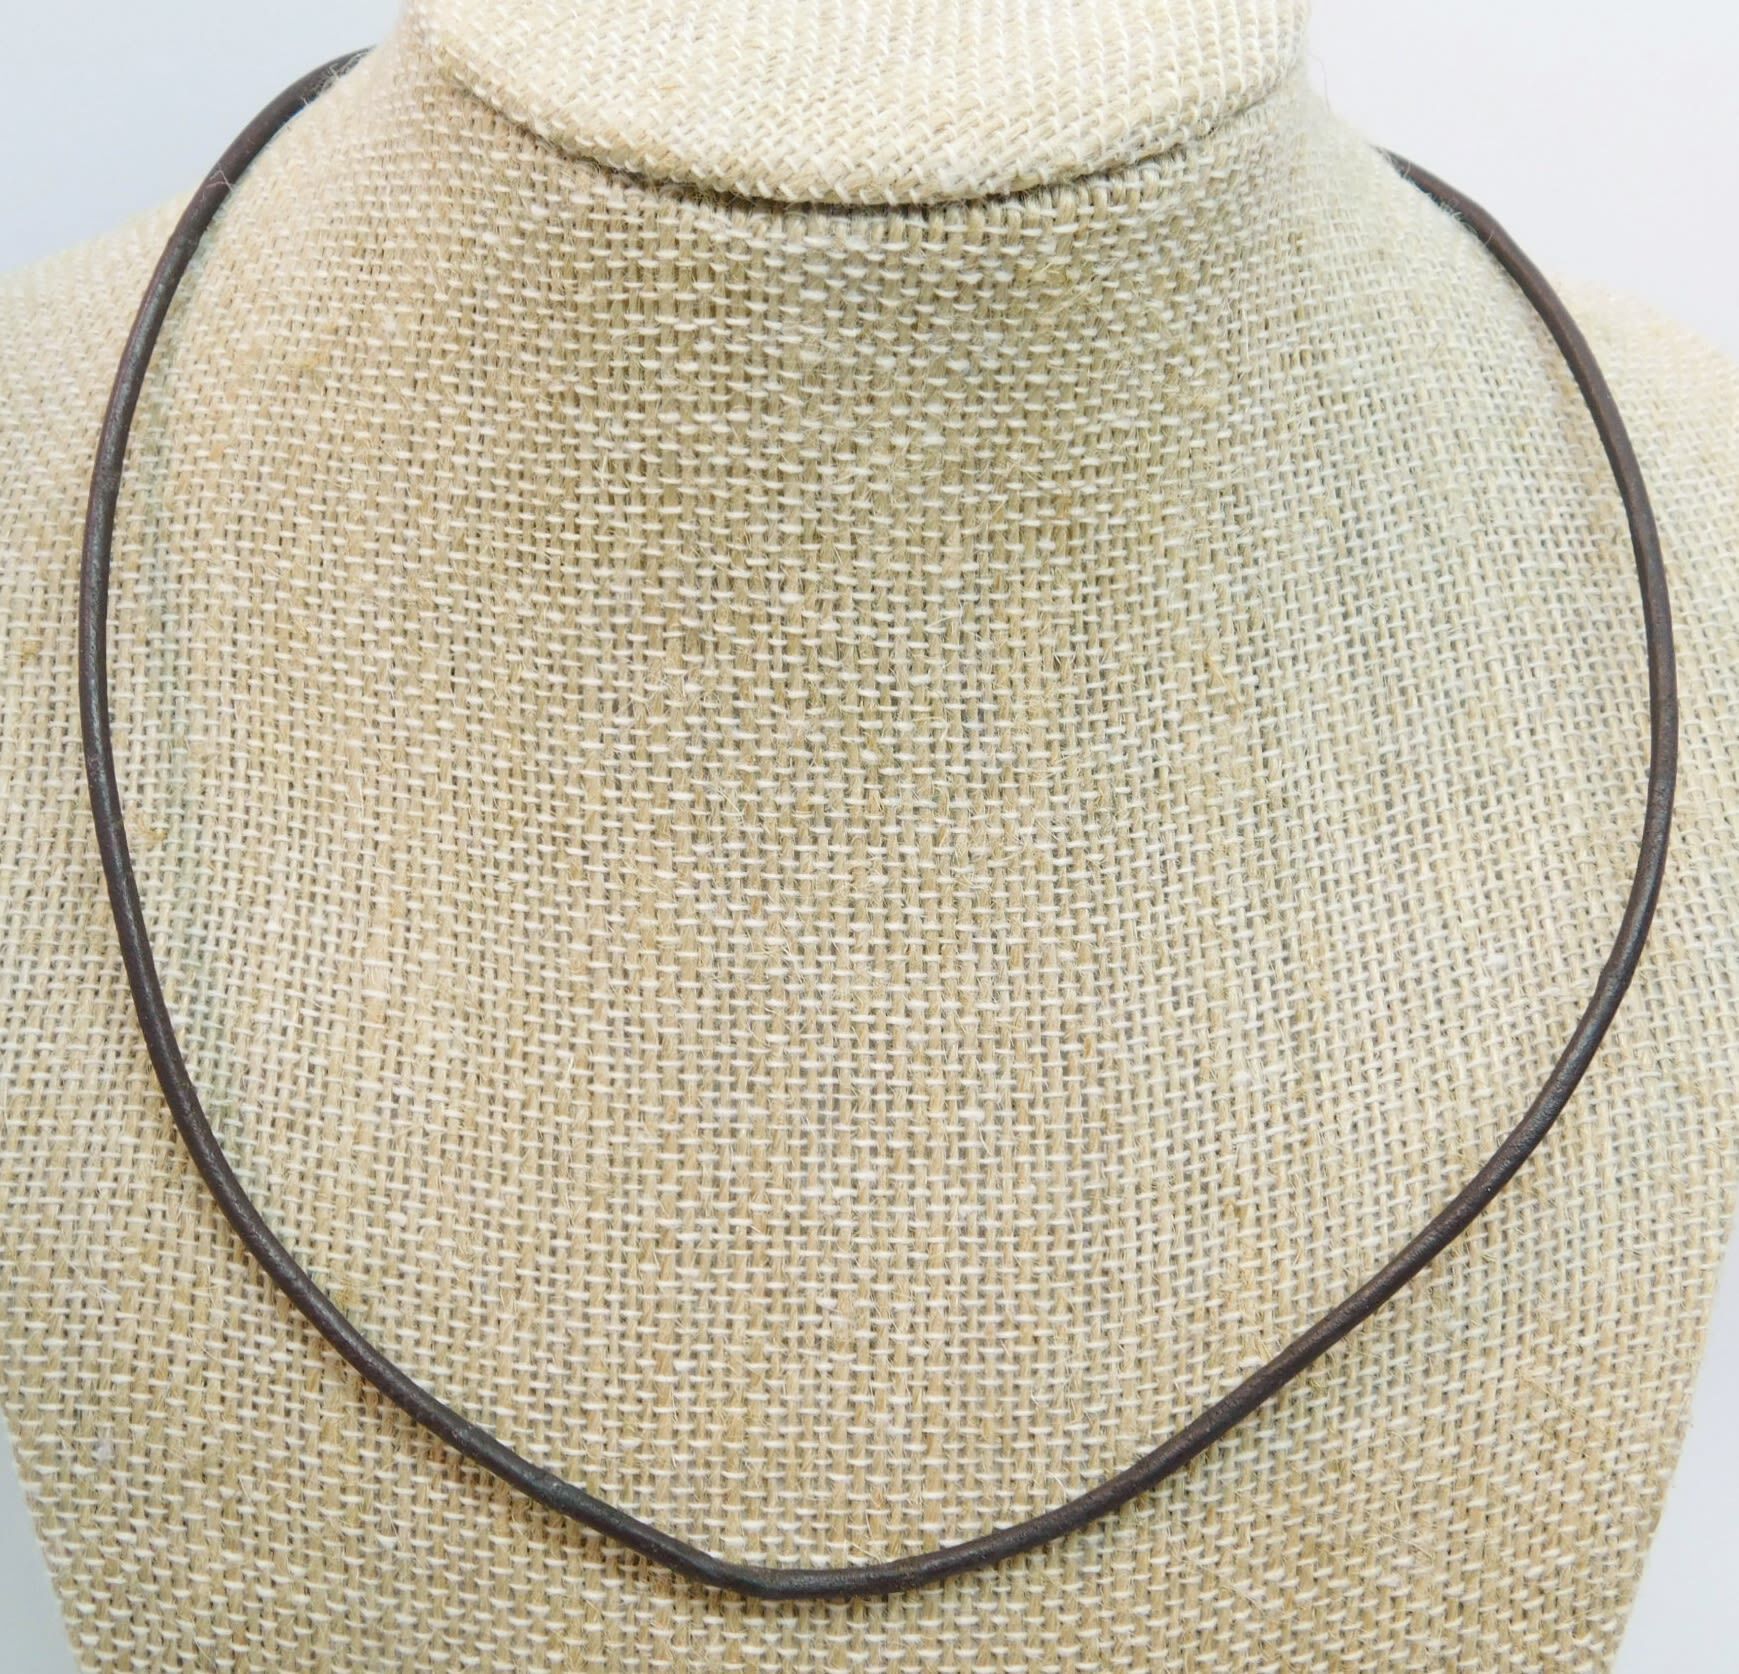 Pandora | Jewelry | Pandora 5 Charm Leather Choker Necklace Is So Beautiful  | Poshmark